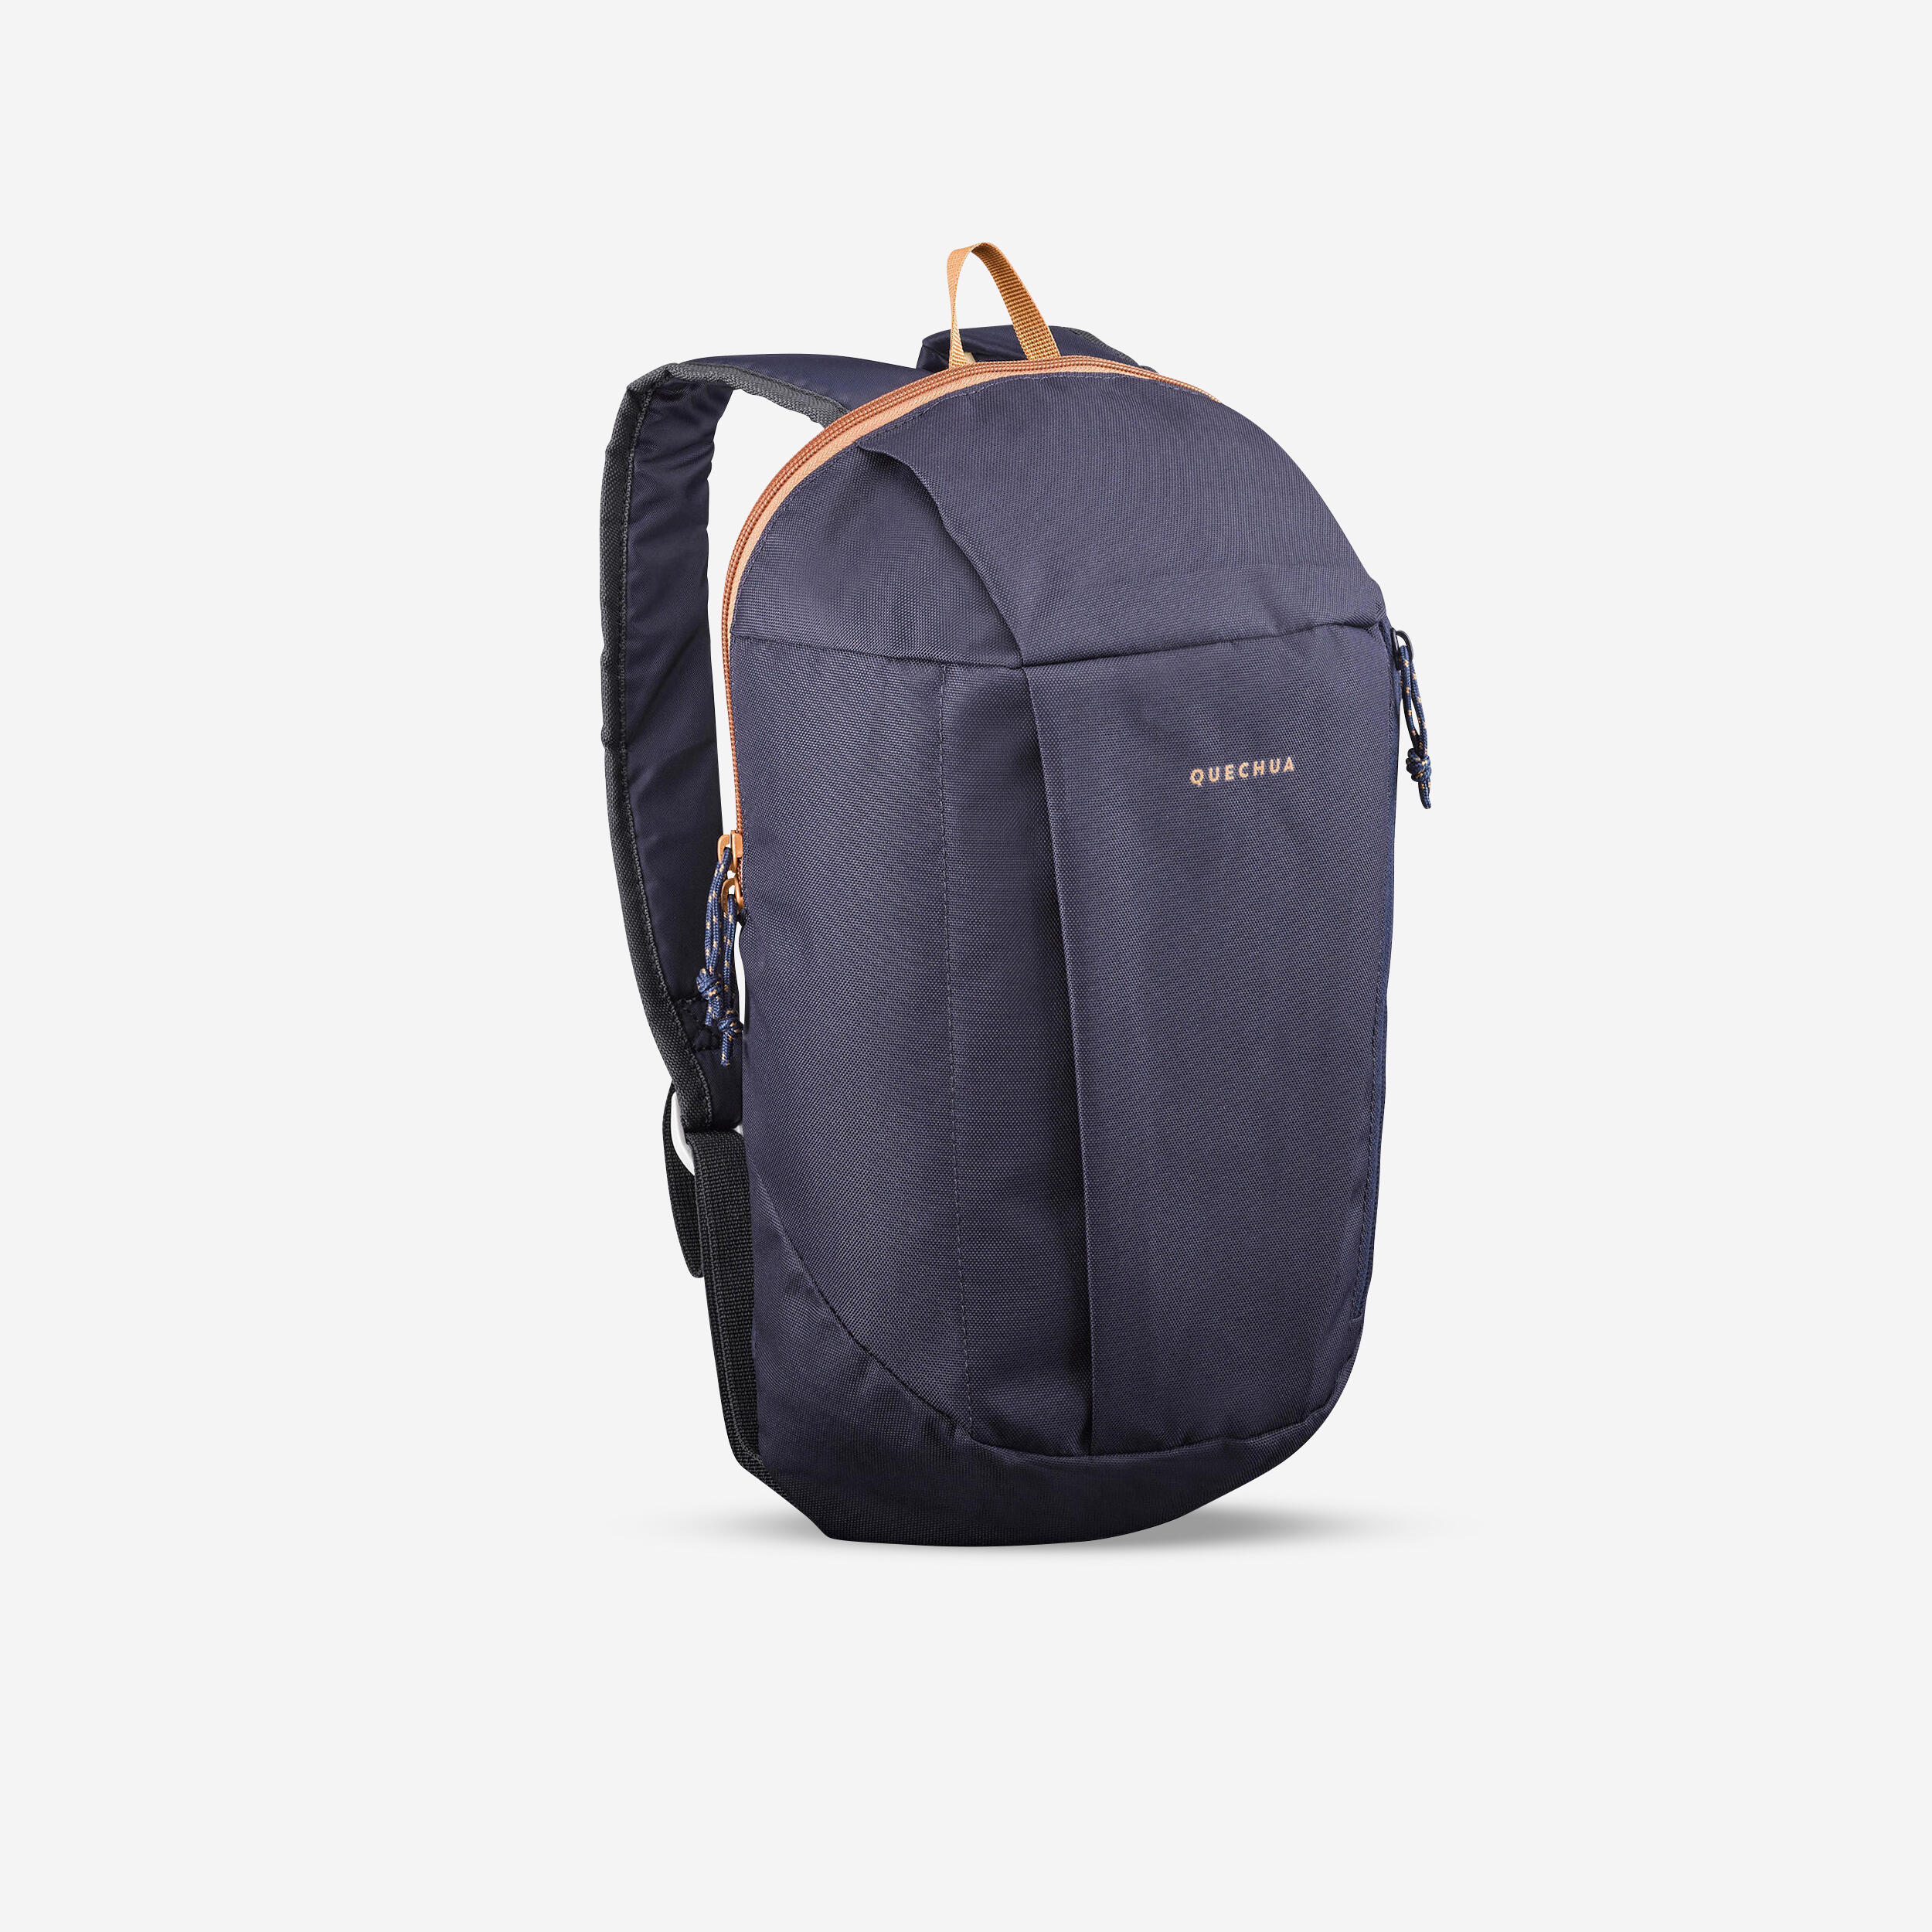 Buy Hiker's way 90 Ltrs Black Rucksack backpacks Travel Bag Hiking Bag  Camping Bag Trekking bags with waterproof compartment & Rain Cover  (HW-9001Black) (Black) at Amazon.in